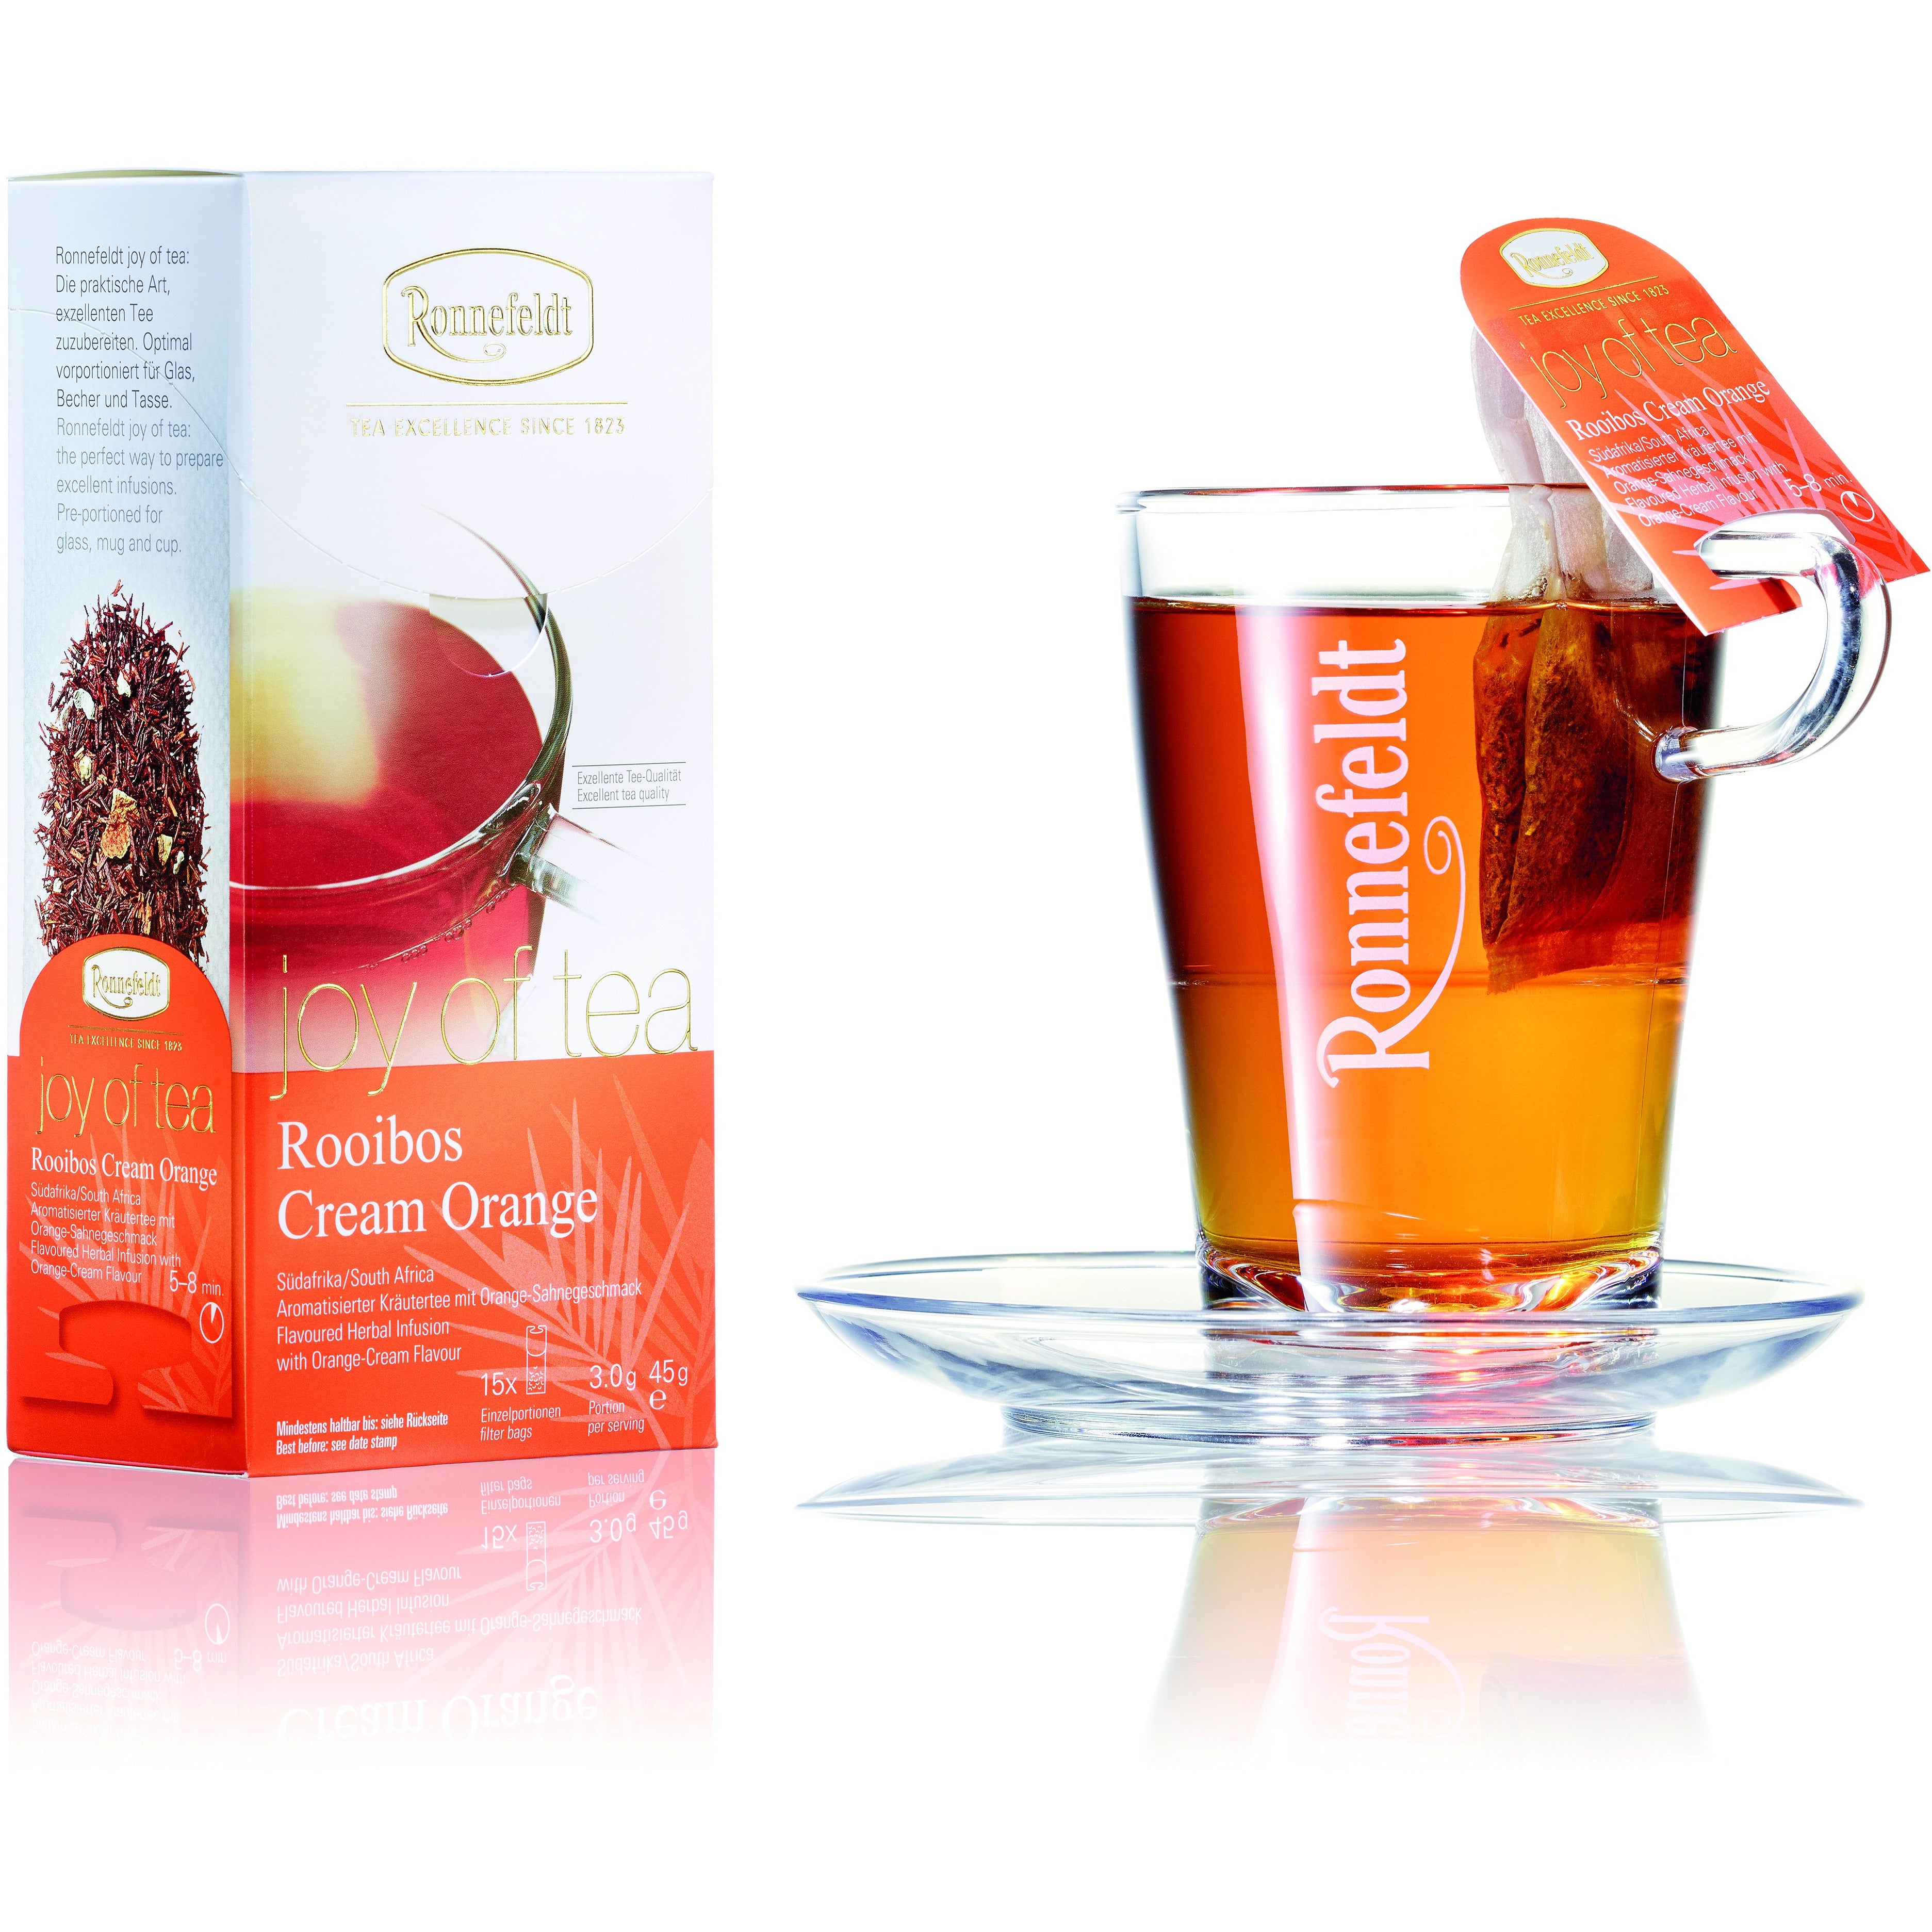 Joy of Tea® Rooibos Cream Orange - mutter holunder